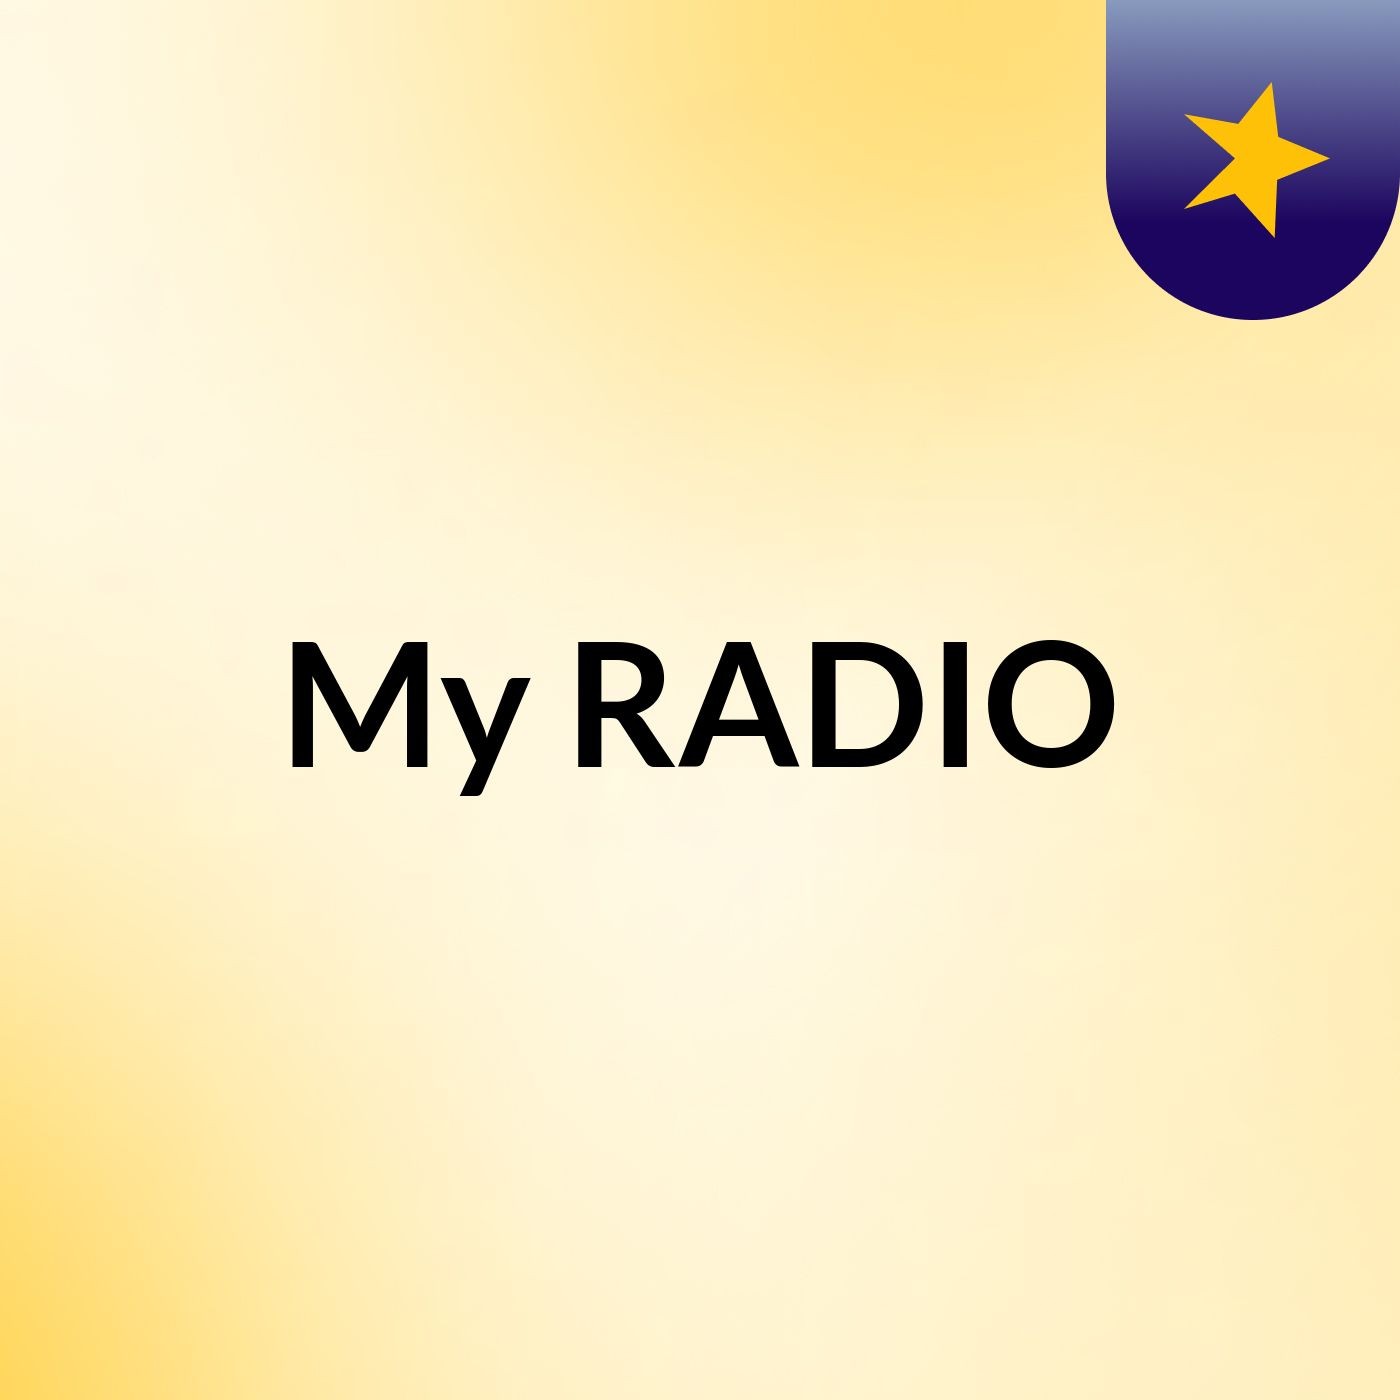 My RADIO